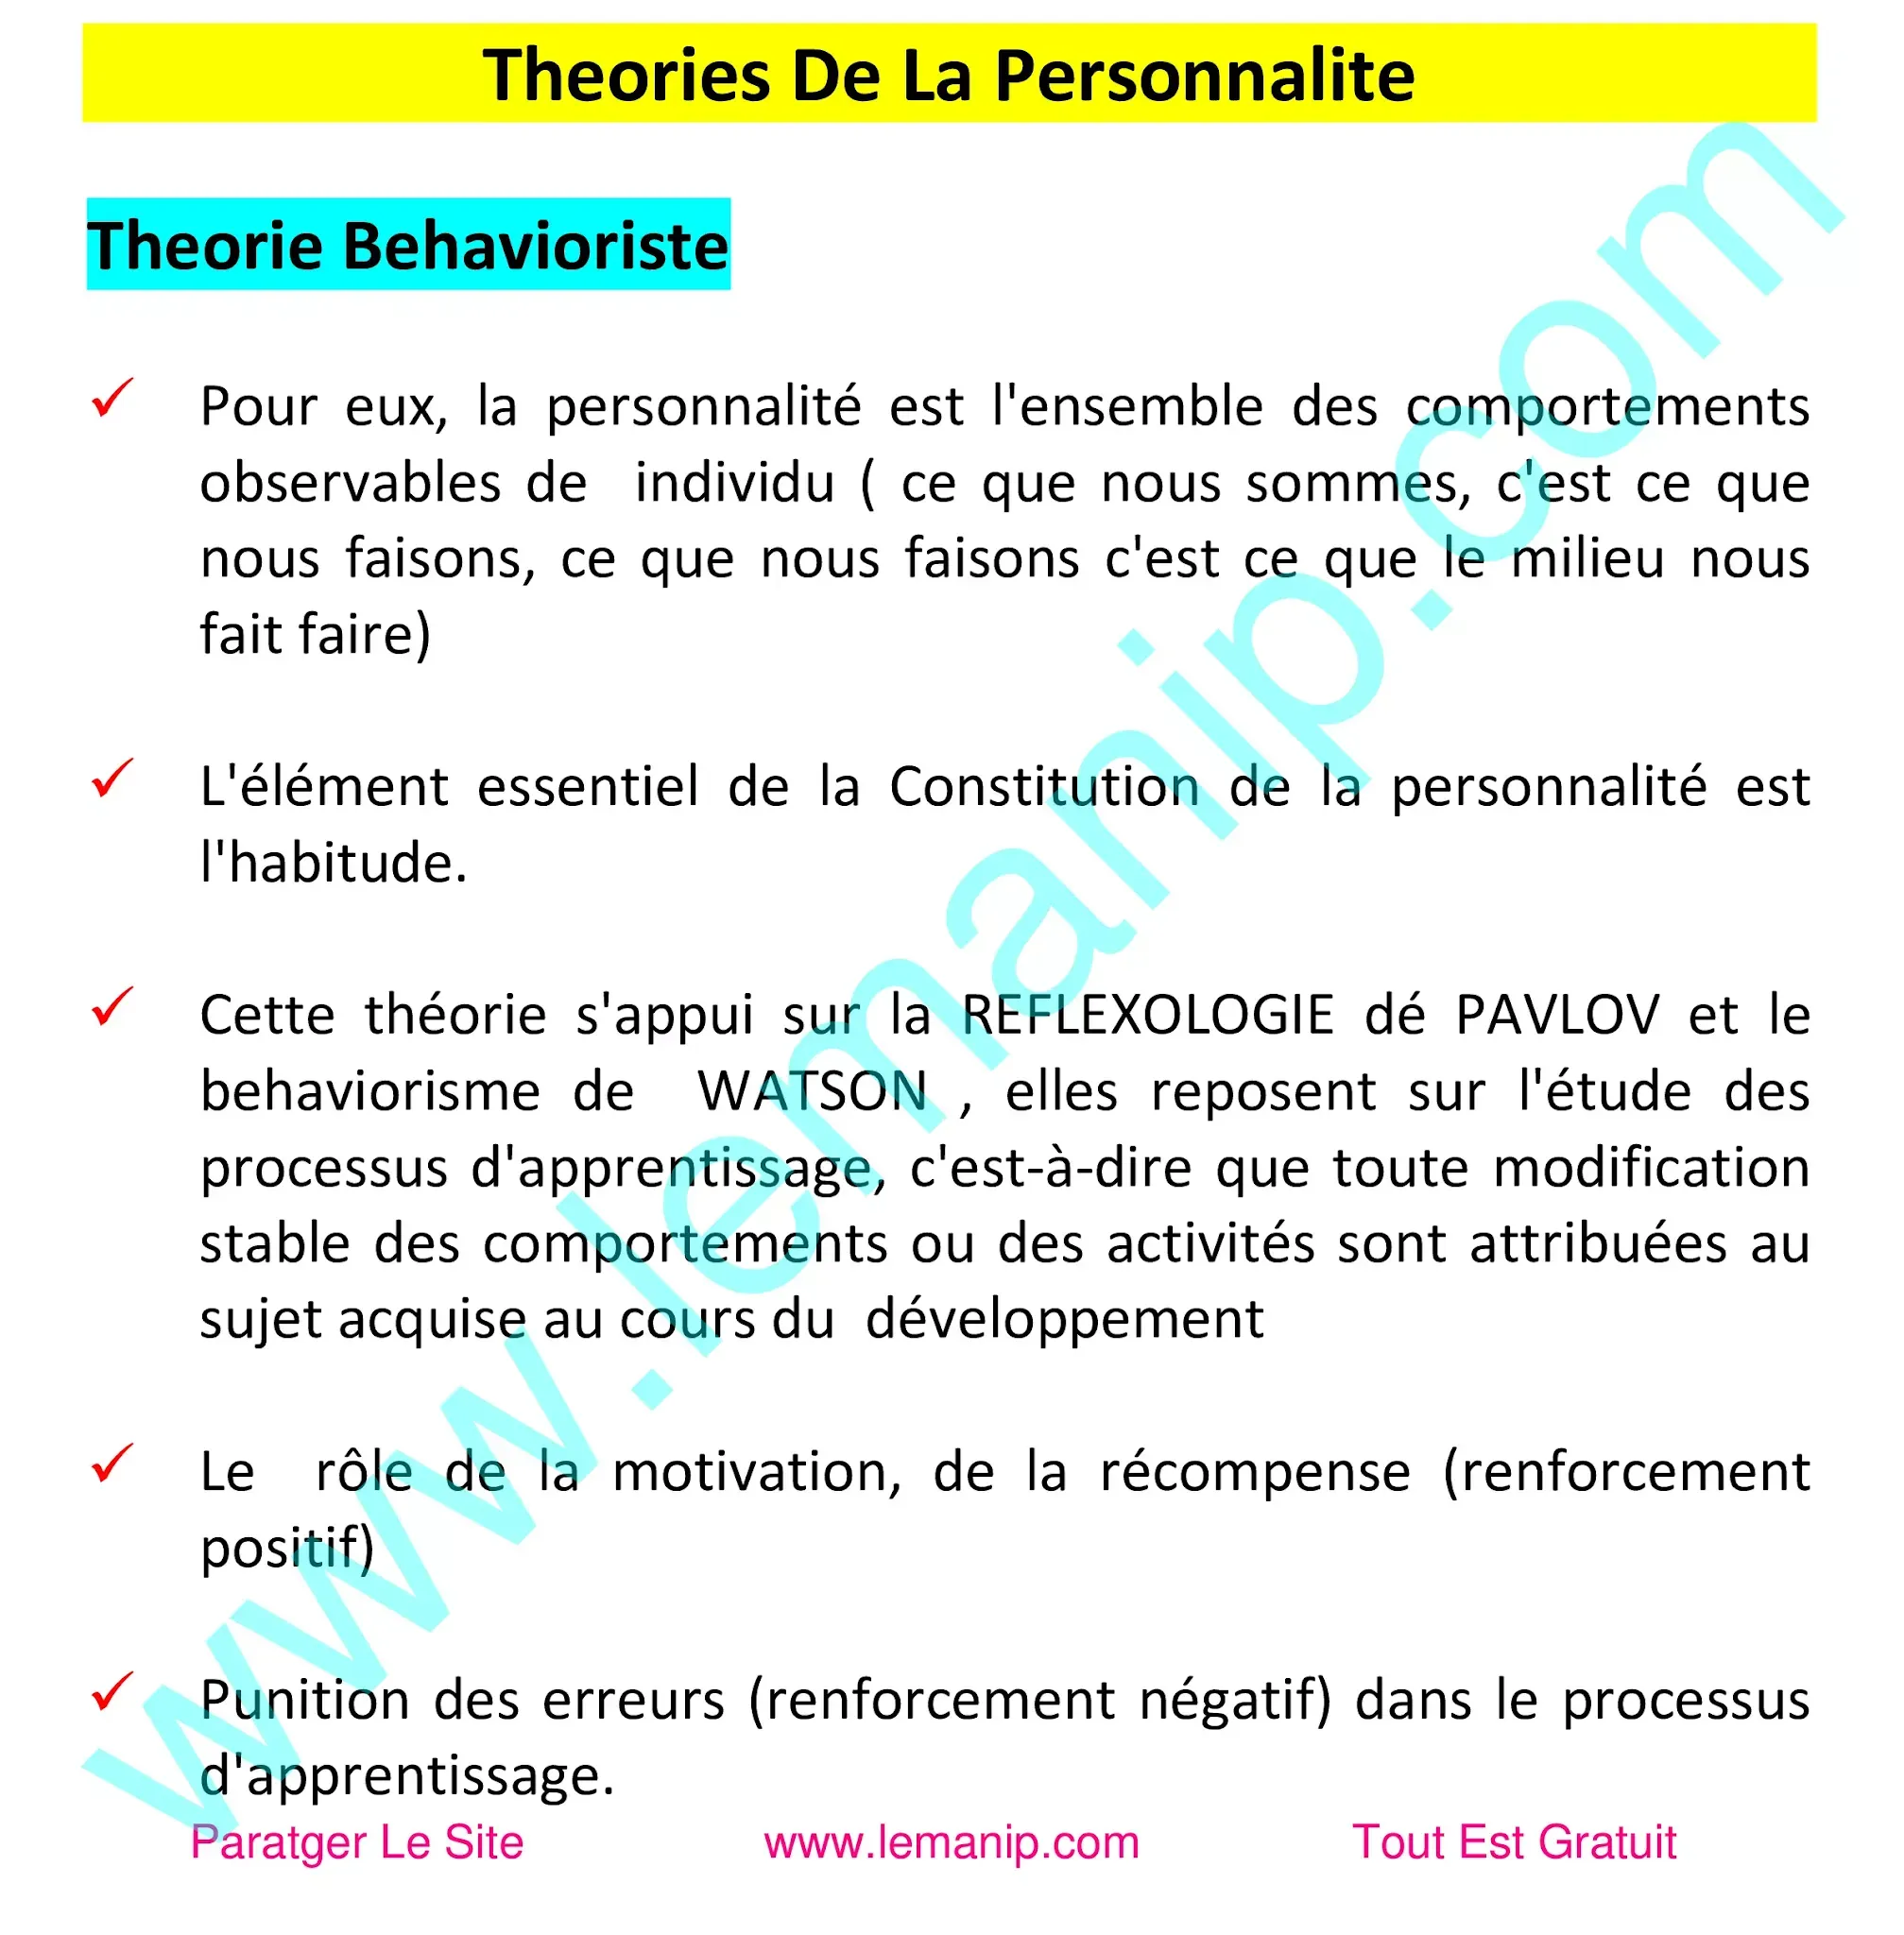 Theories De La Personnalite